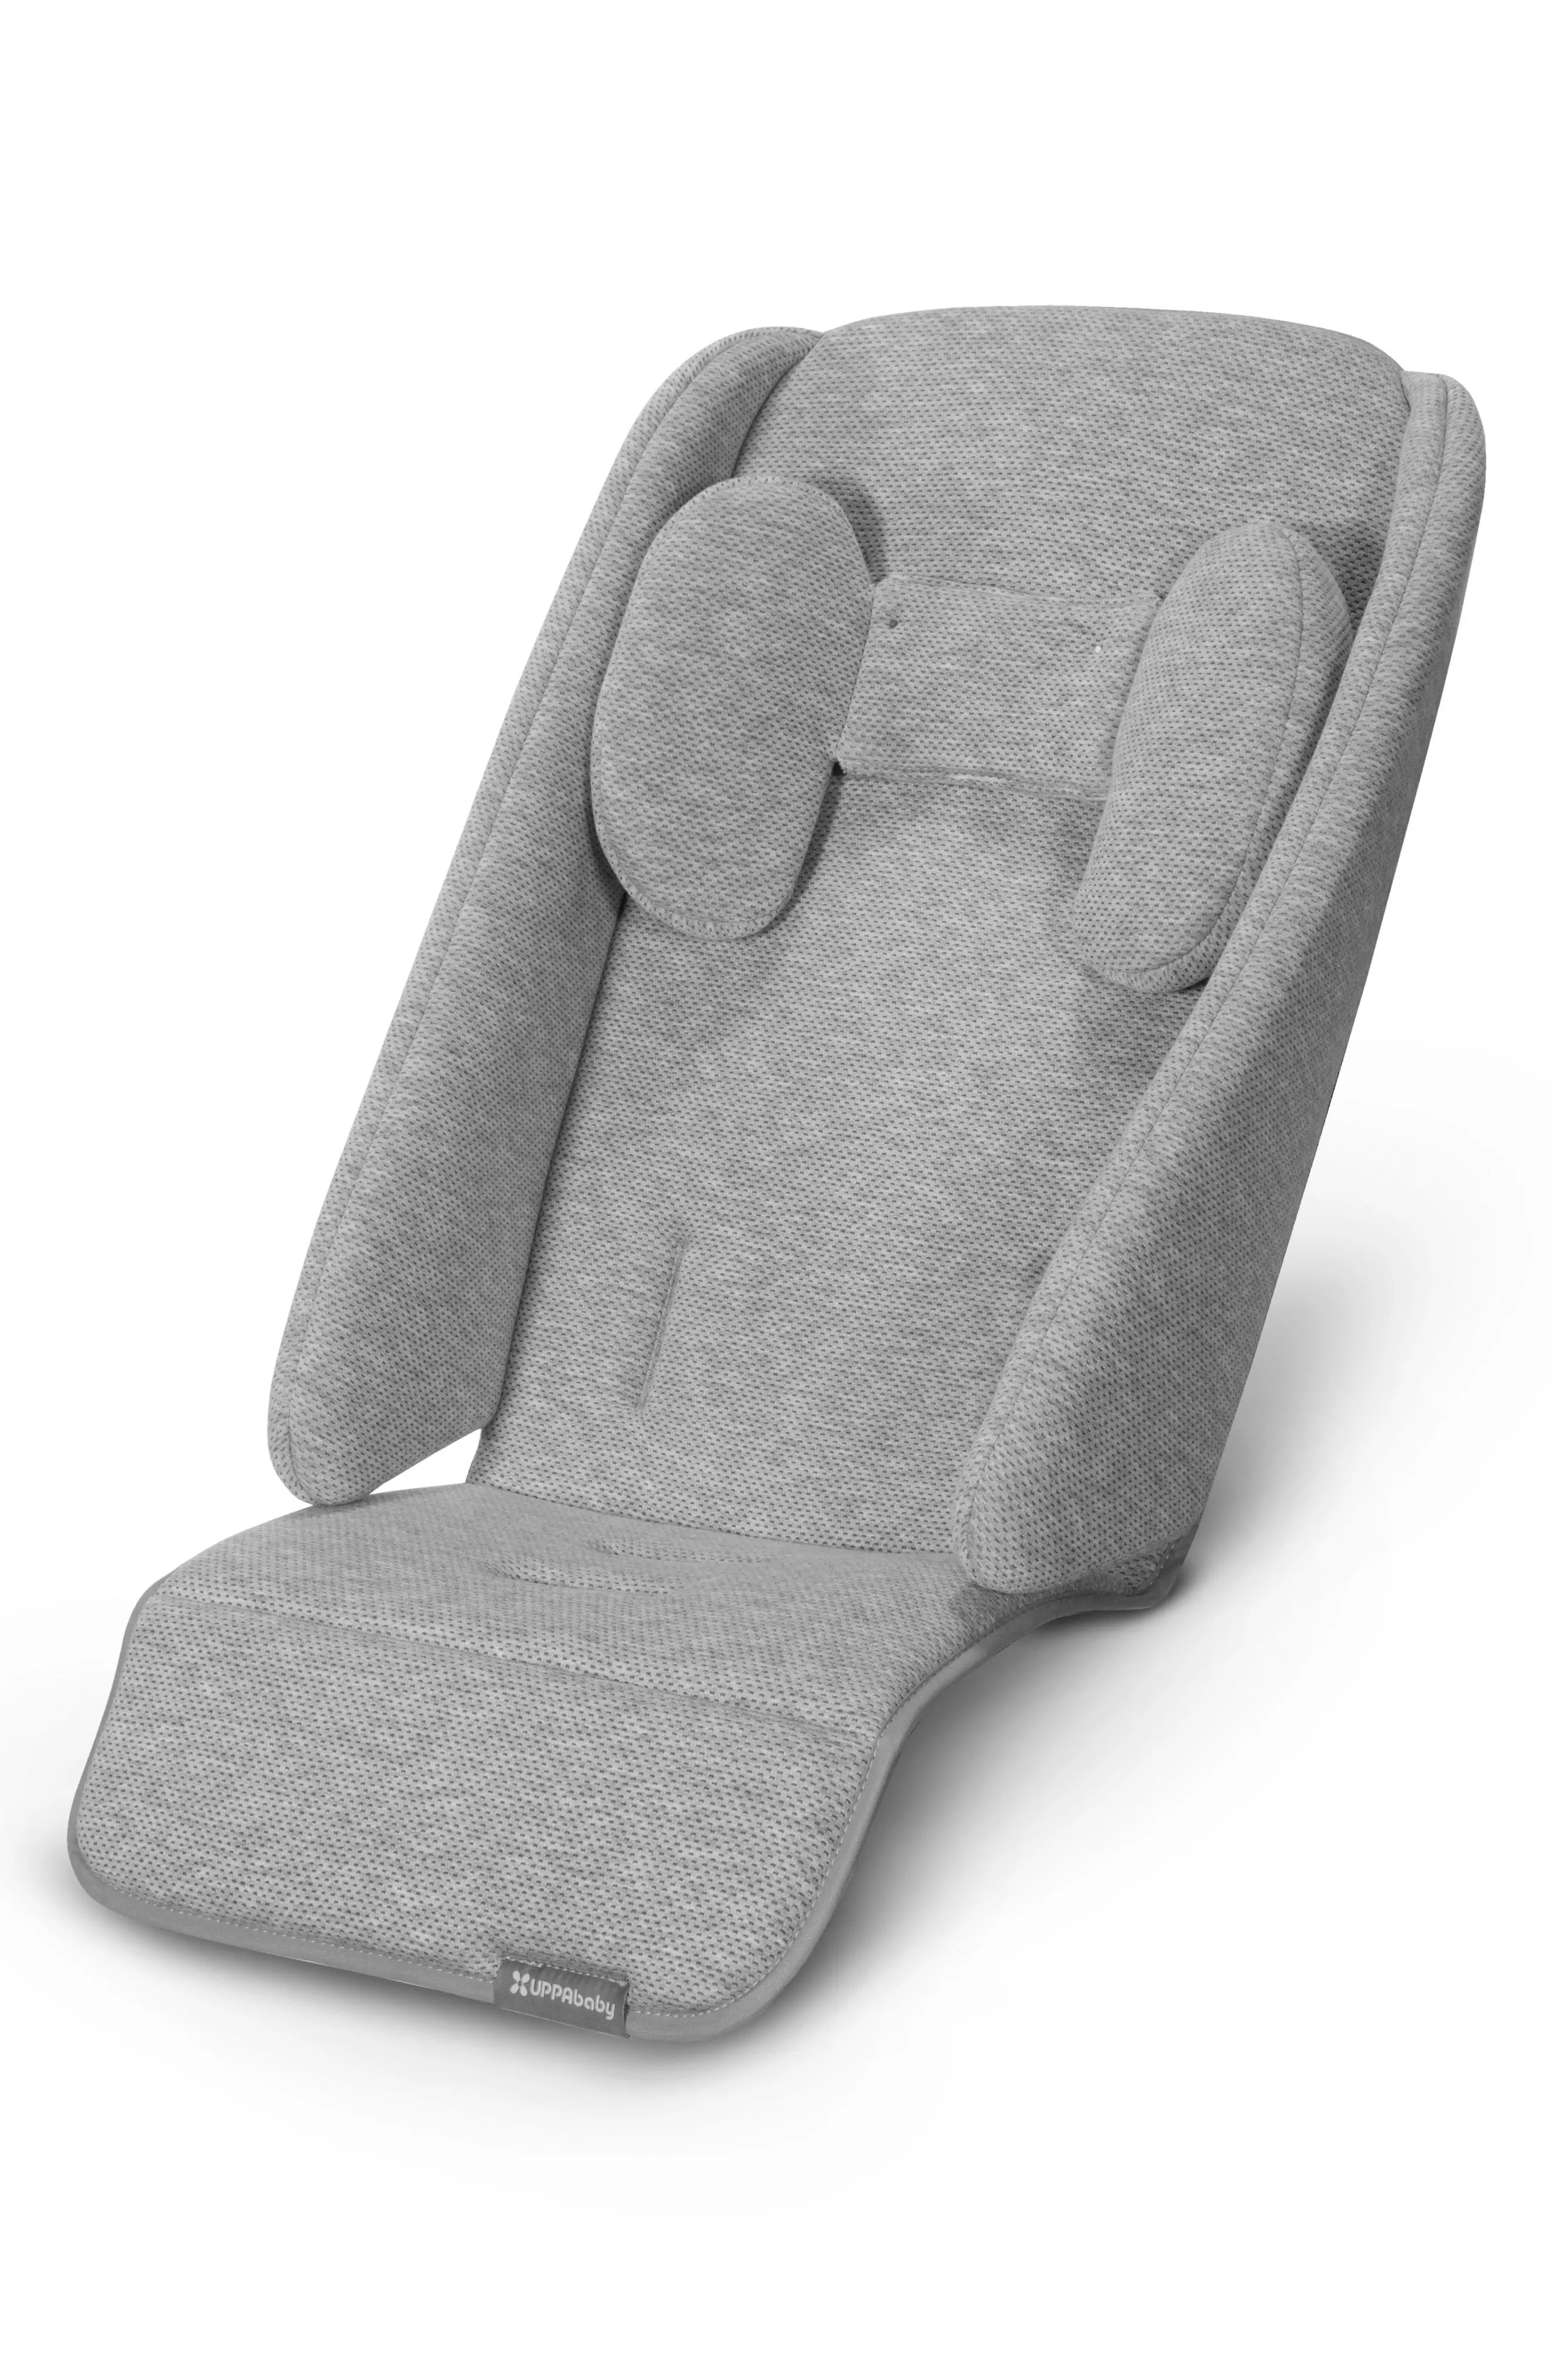 Snug Seat Seat Liner for UPPAbaby VISTA & CRUZ Strollers in Black at Nordstrom | Nordstrom